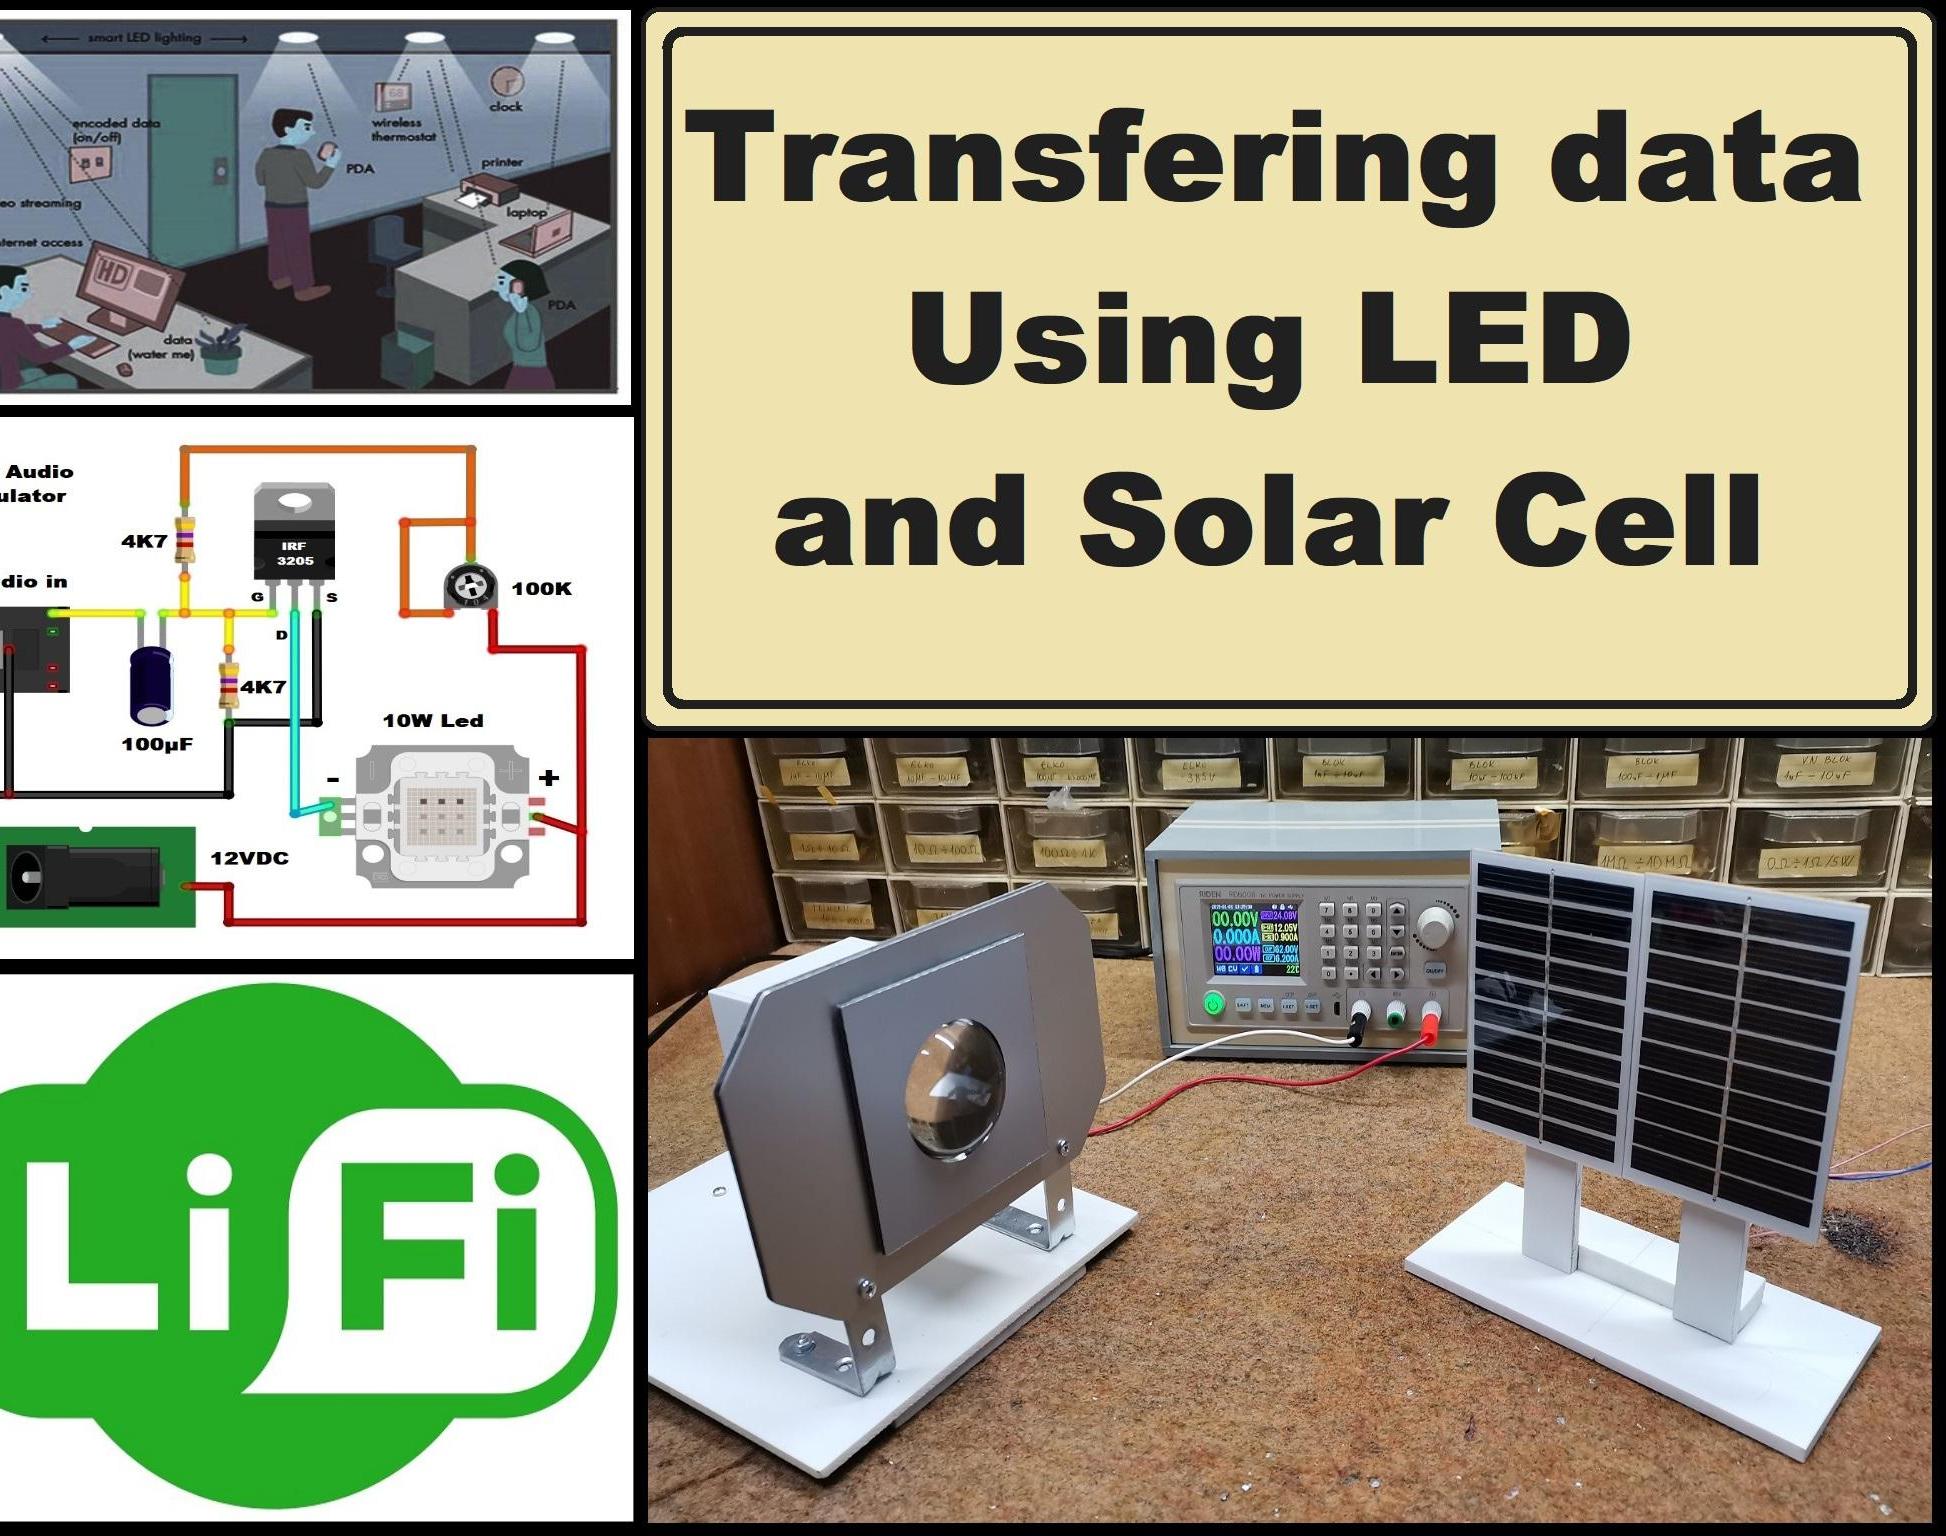 Li-Fi Data Transfer Experiment - Transferring Data Using a Led and Solar Cell